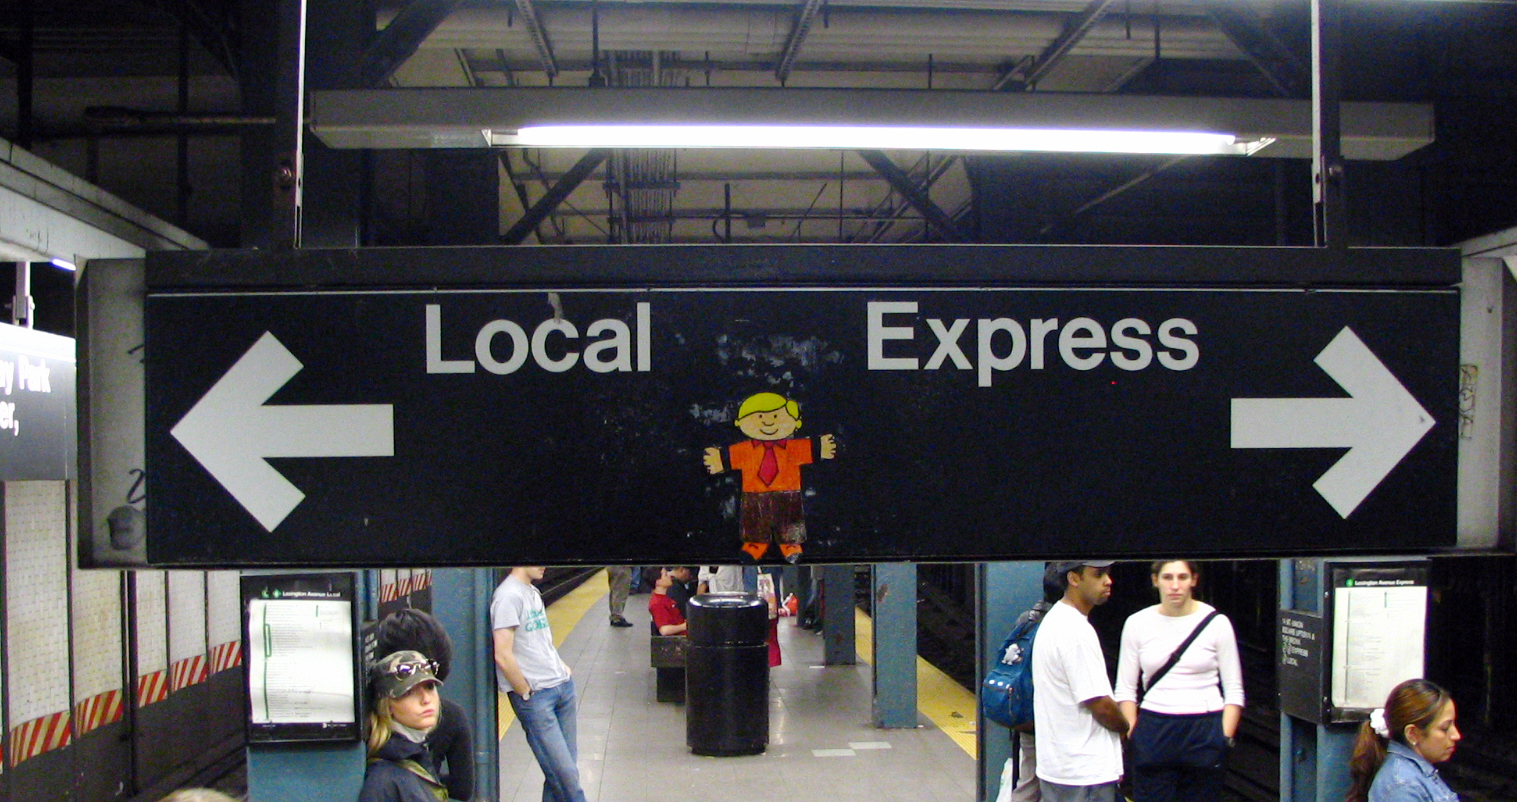 Local and Express subway signs